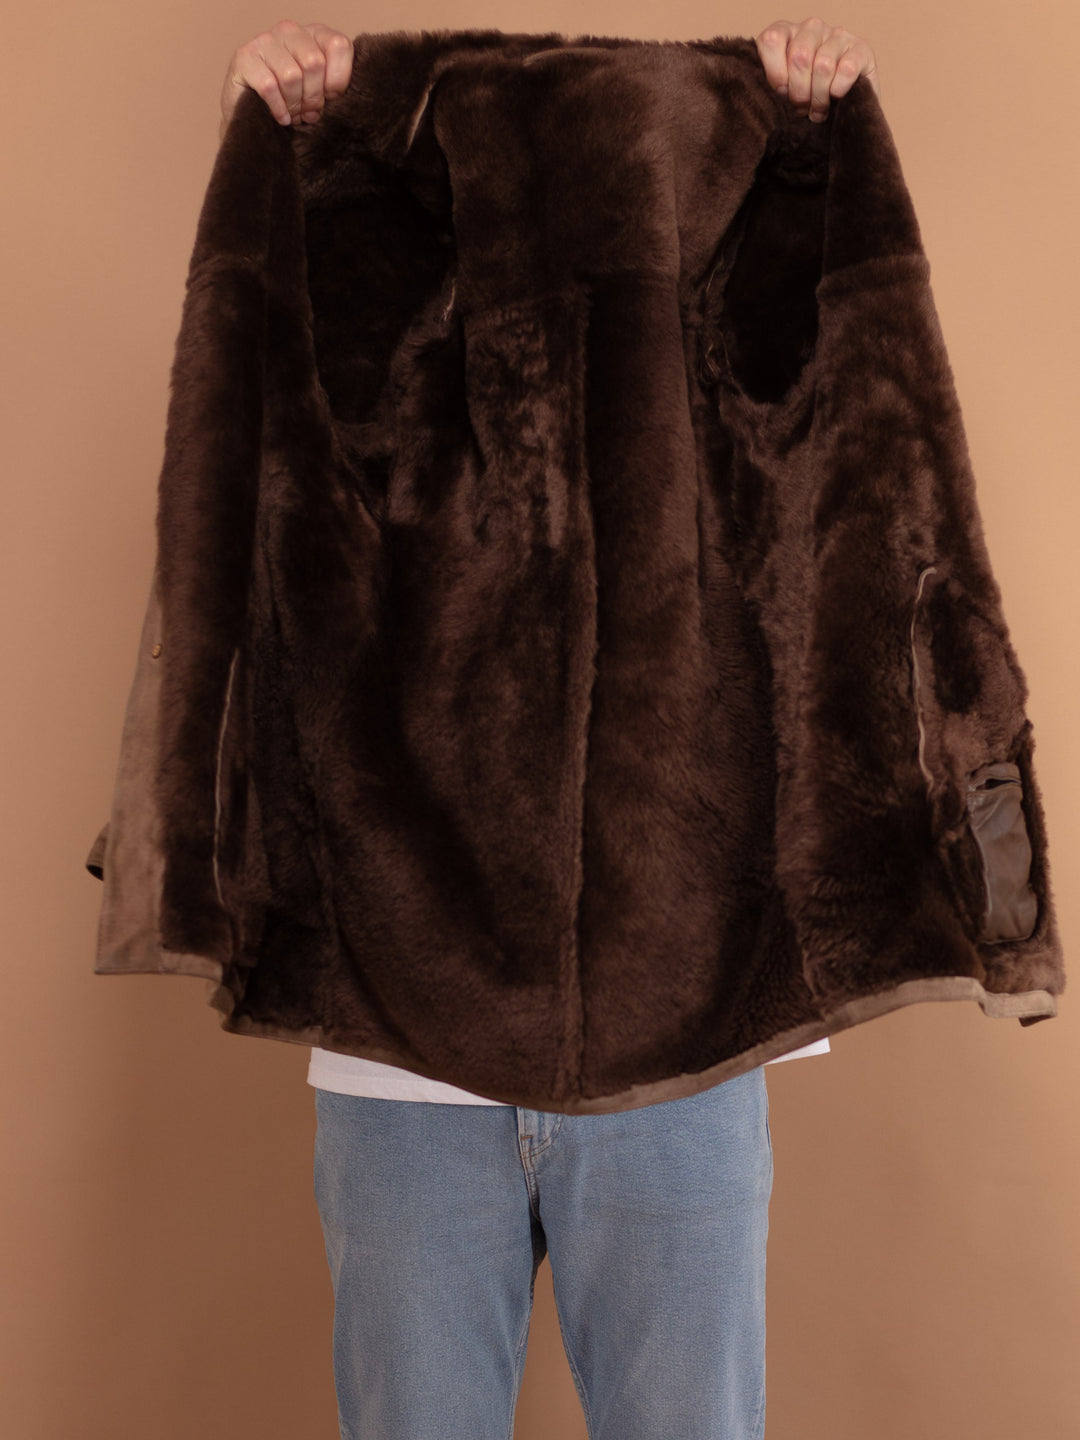 Vintage Shearling Coat 70s, Size Medium, Vintage Men Sheepskin Coat, Boho Style Warm Winter Coat, Beige Suede Coat, Gift for Men